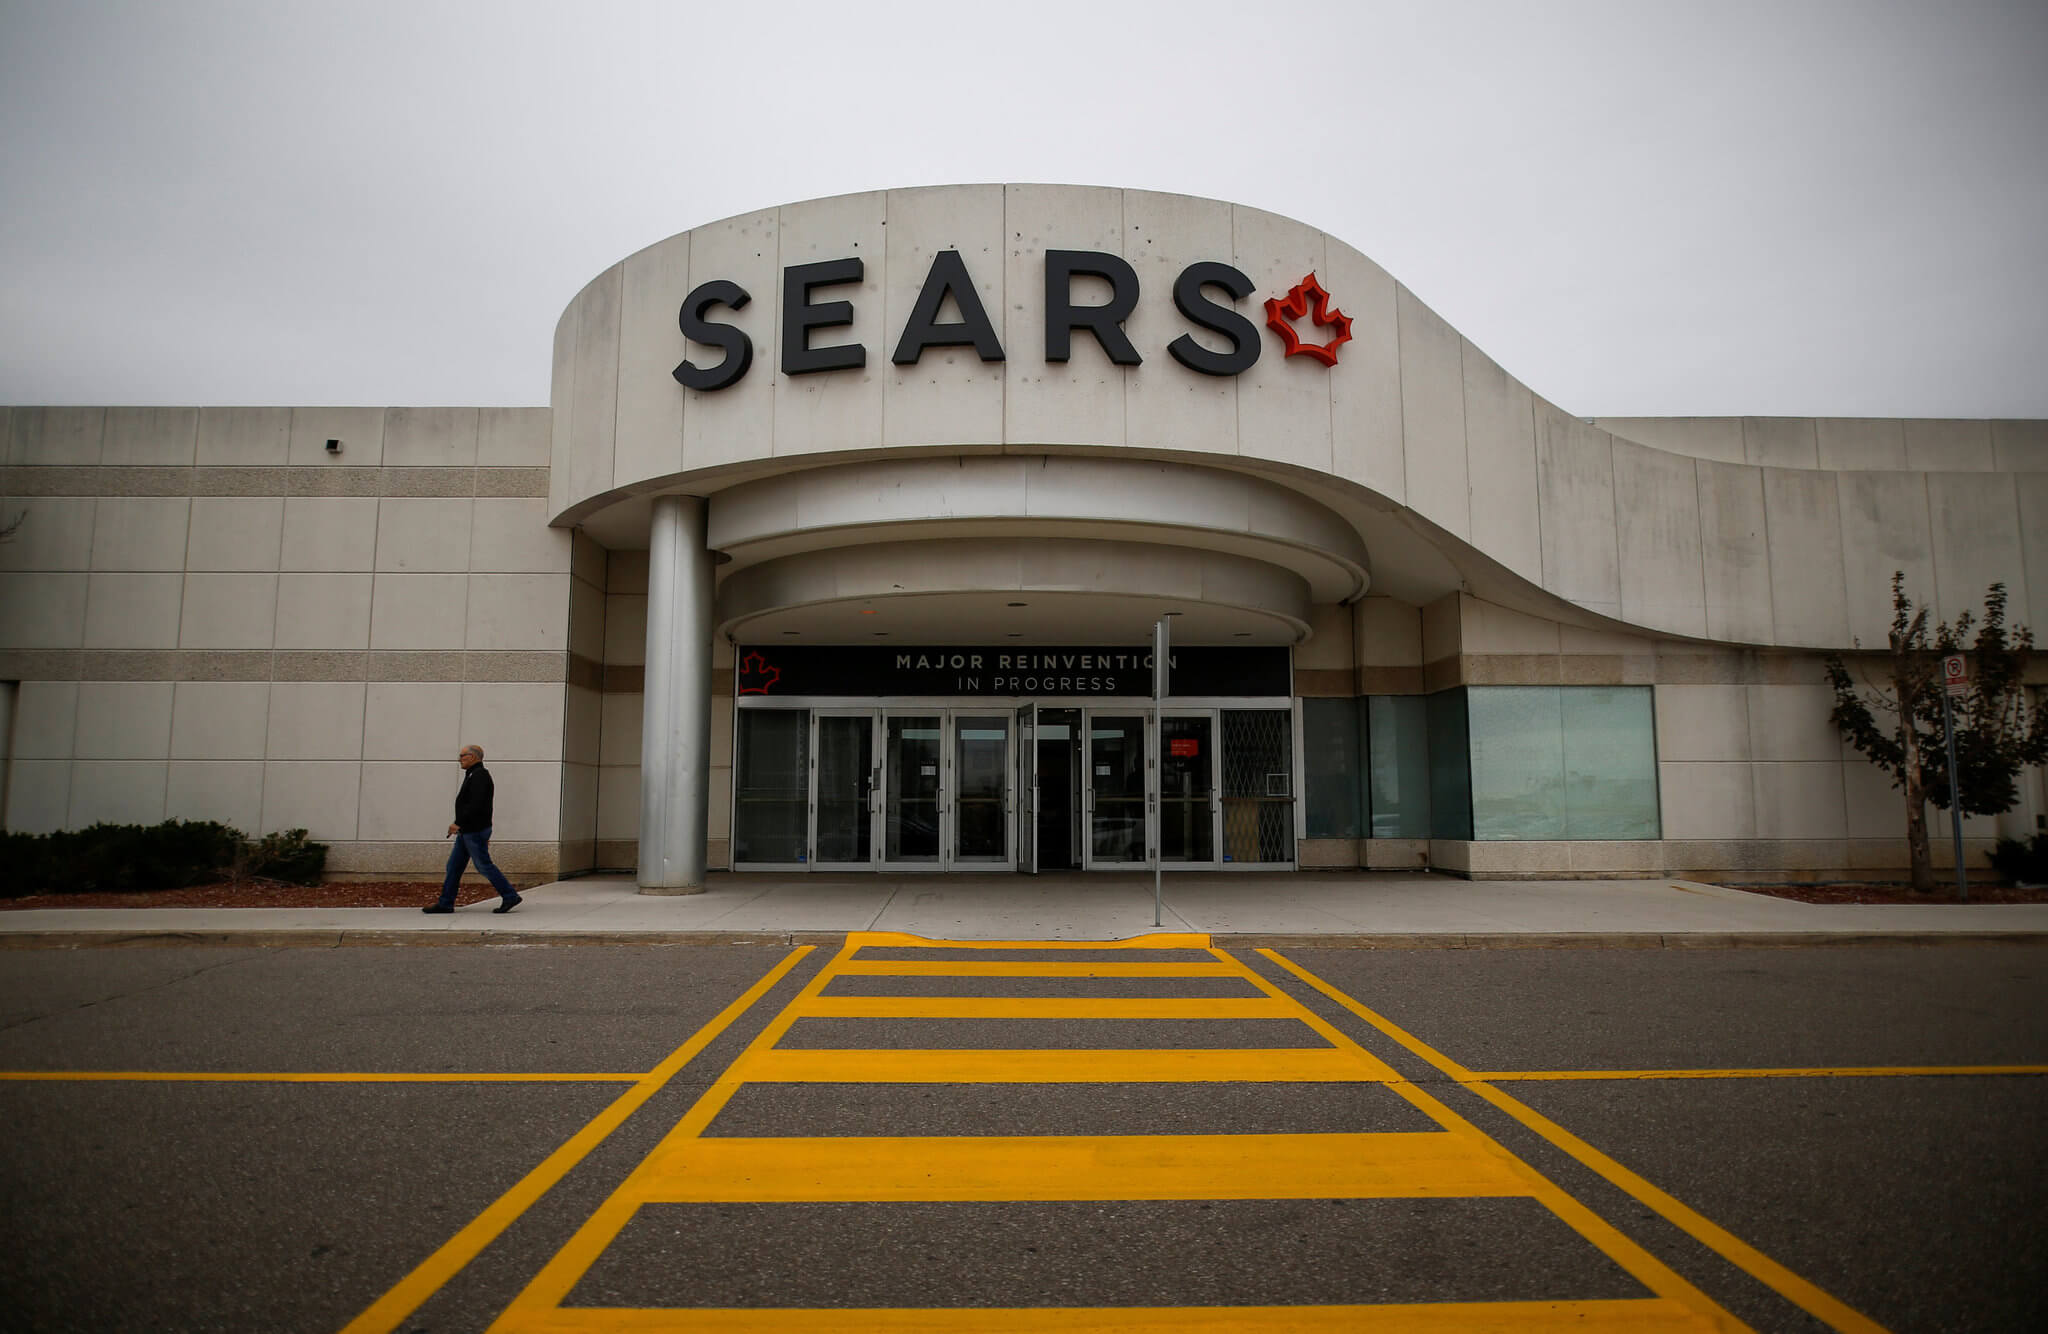 www.tellsears.ca – Tell Sears Canada Survey